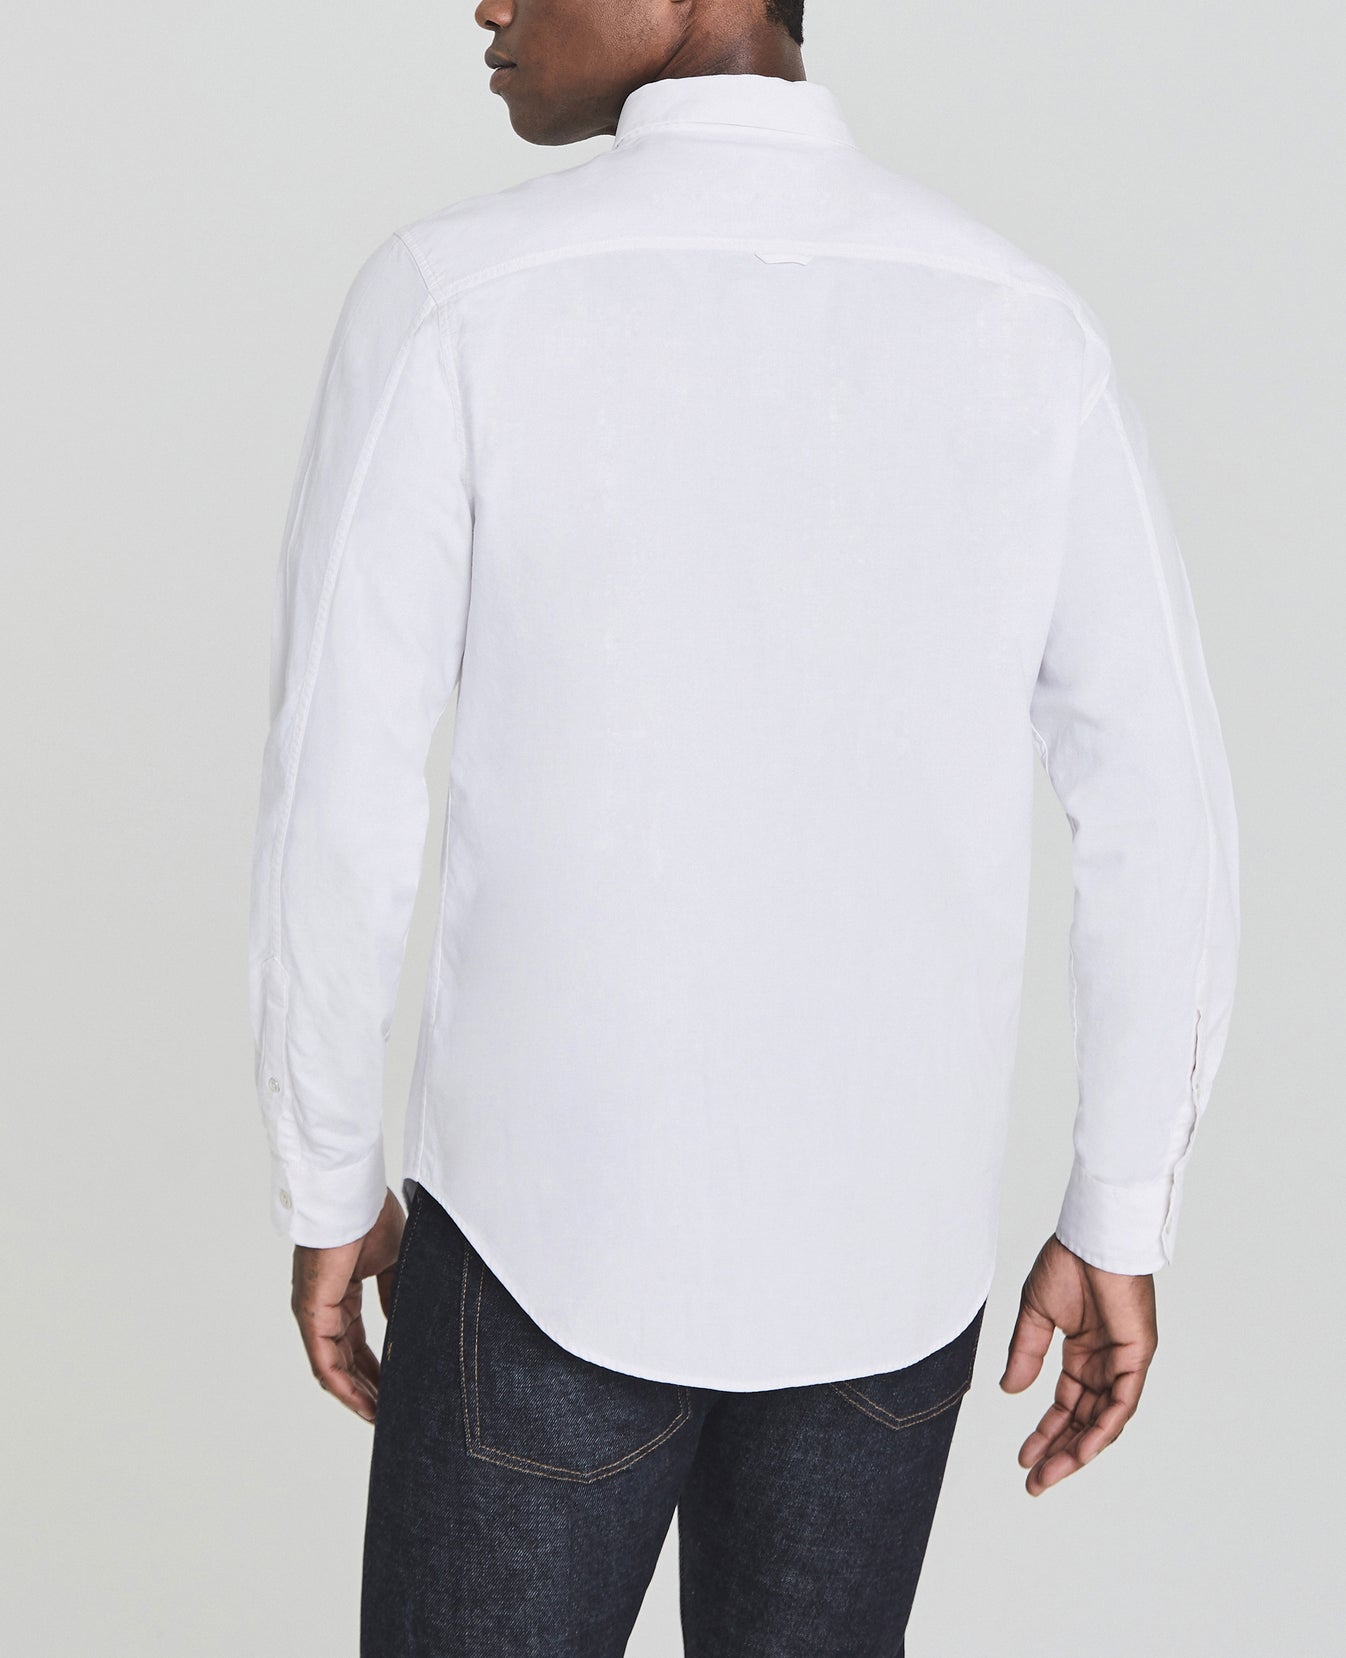 Ace Pocket Shirt Ivory Dust Long Sleeve Shirt Men Tops Photo 6